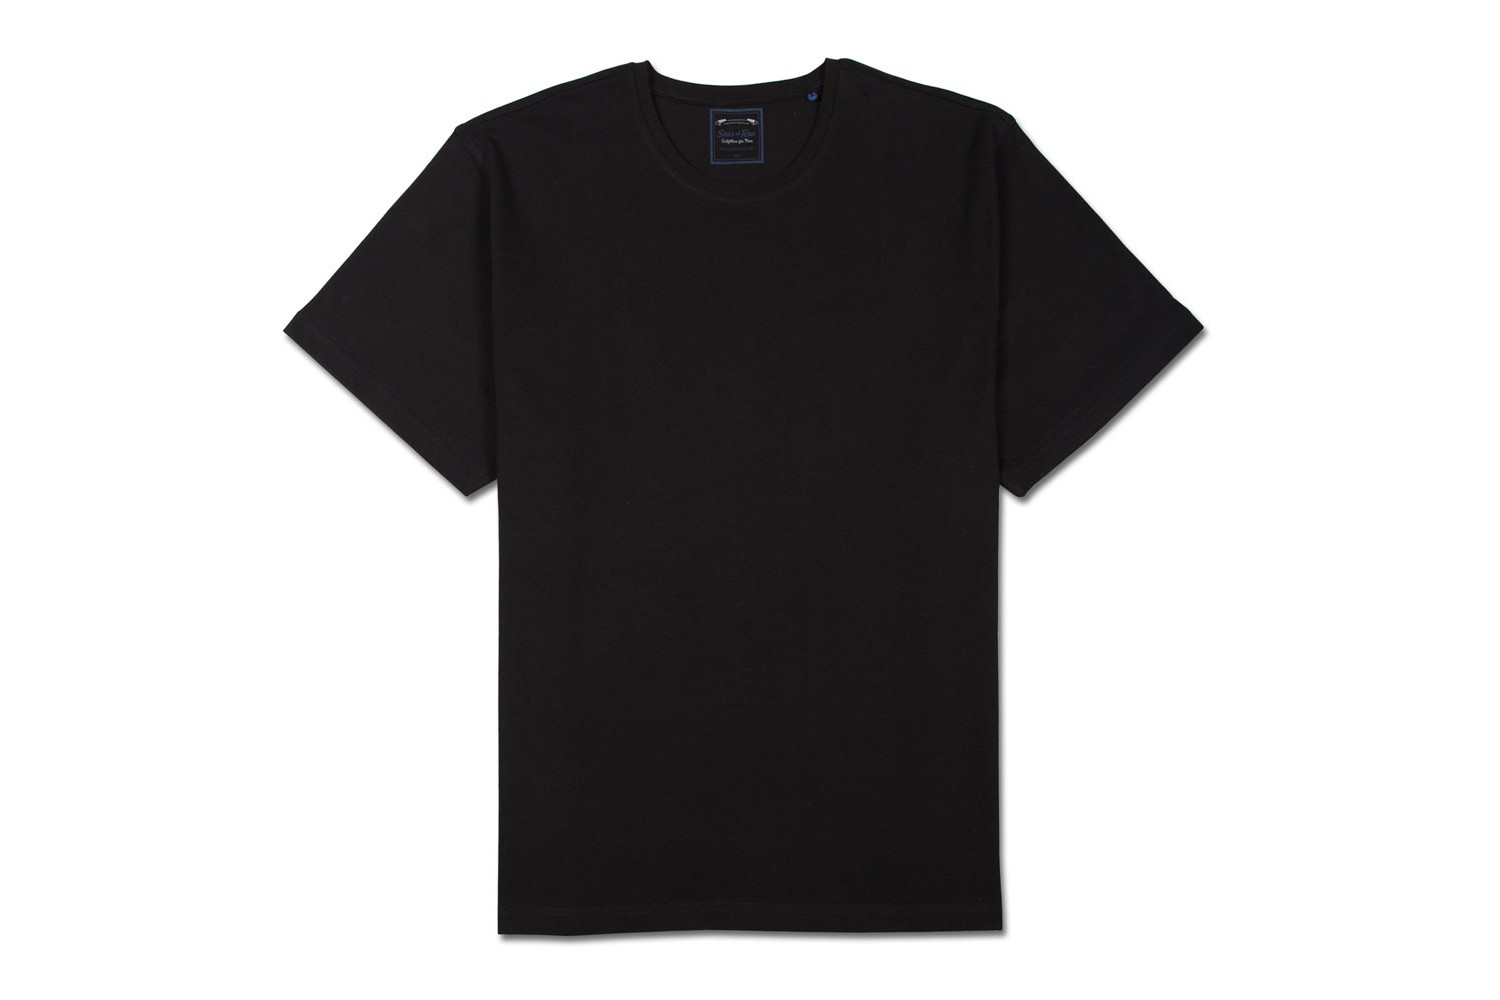 SONS OF RON Plain T Shirt in BLACK, Plain pattern, 100% Cotton ...